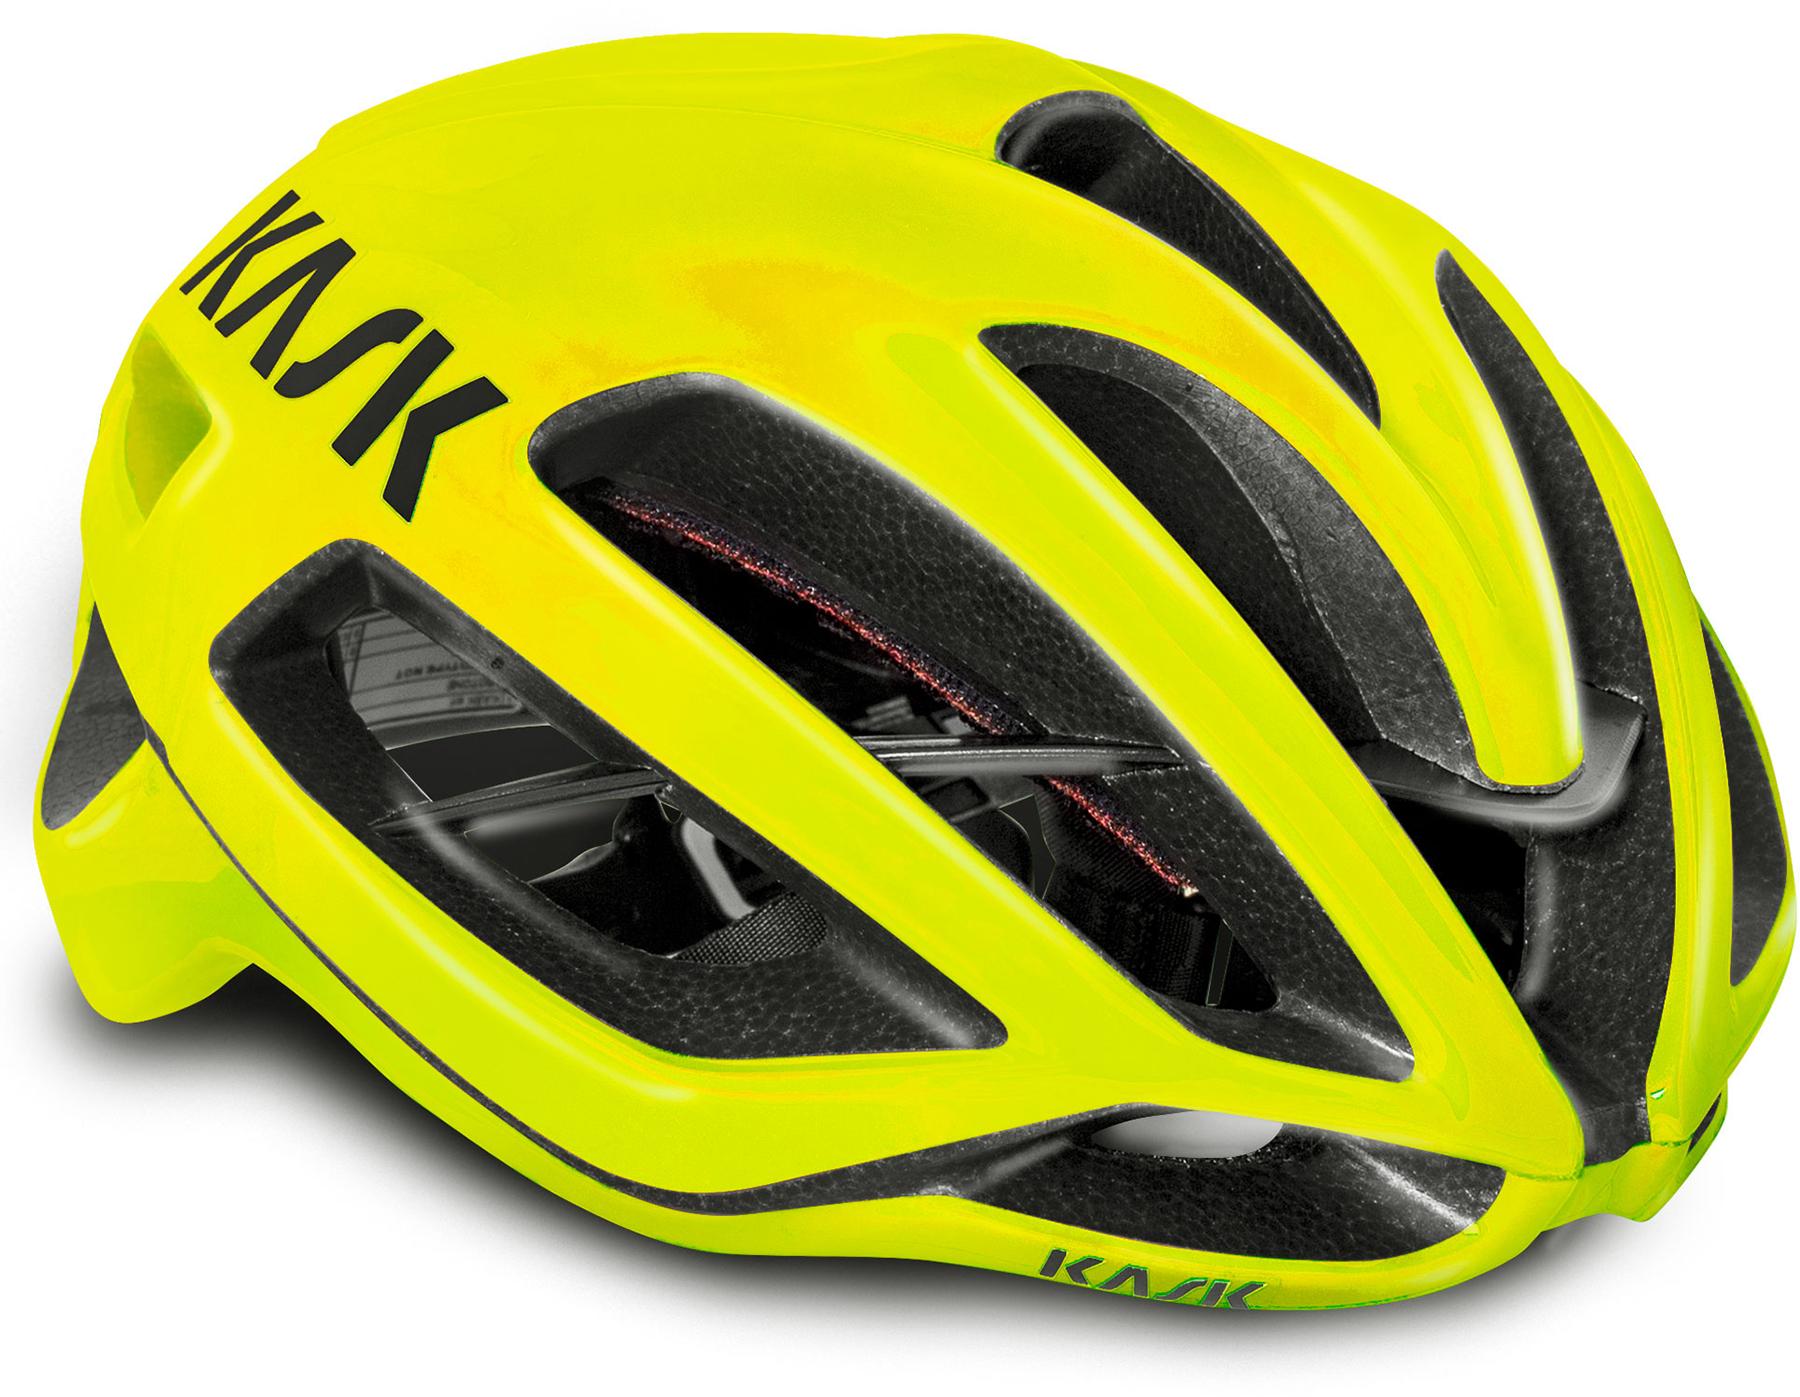 Kask Protone Road Helmet (wg11) - Yellow Fluo